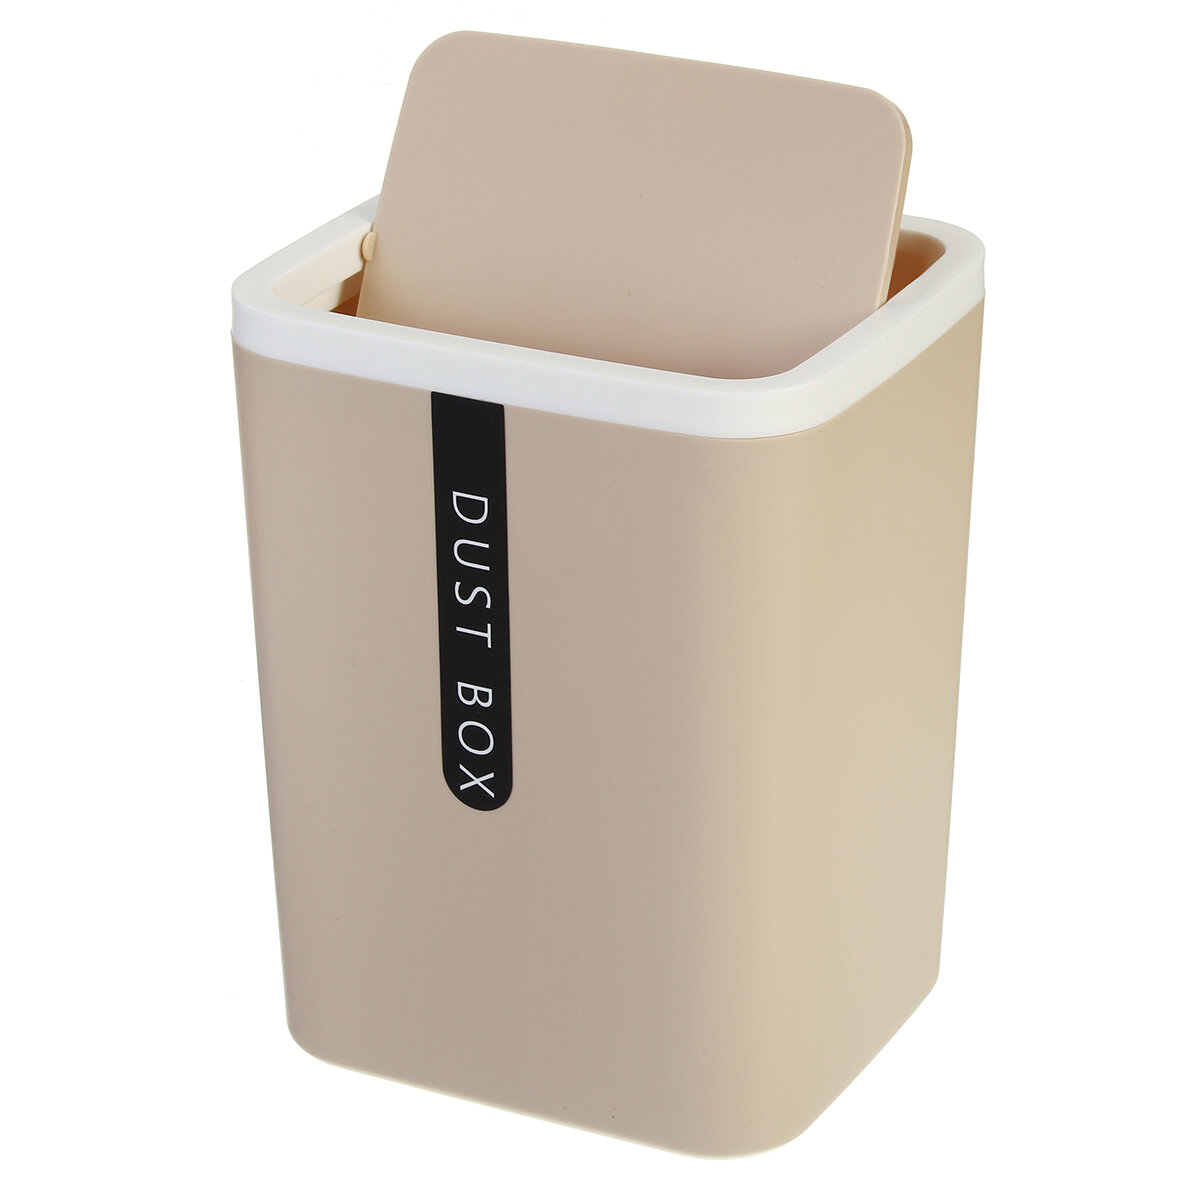 Japanese Desktop Trash Can Mini Office Plastic Swing Cover Storage Bin Waste Bins for Room Tea Table